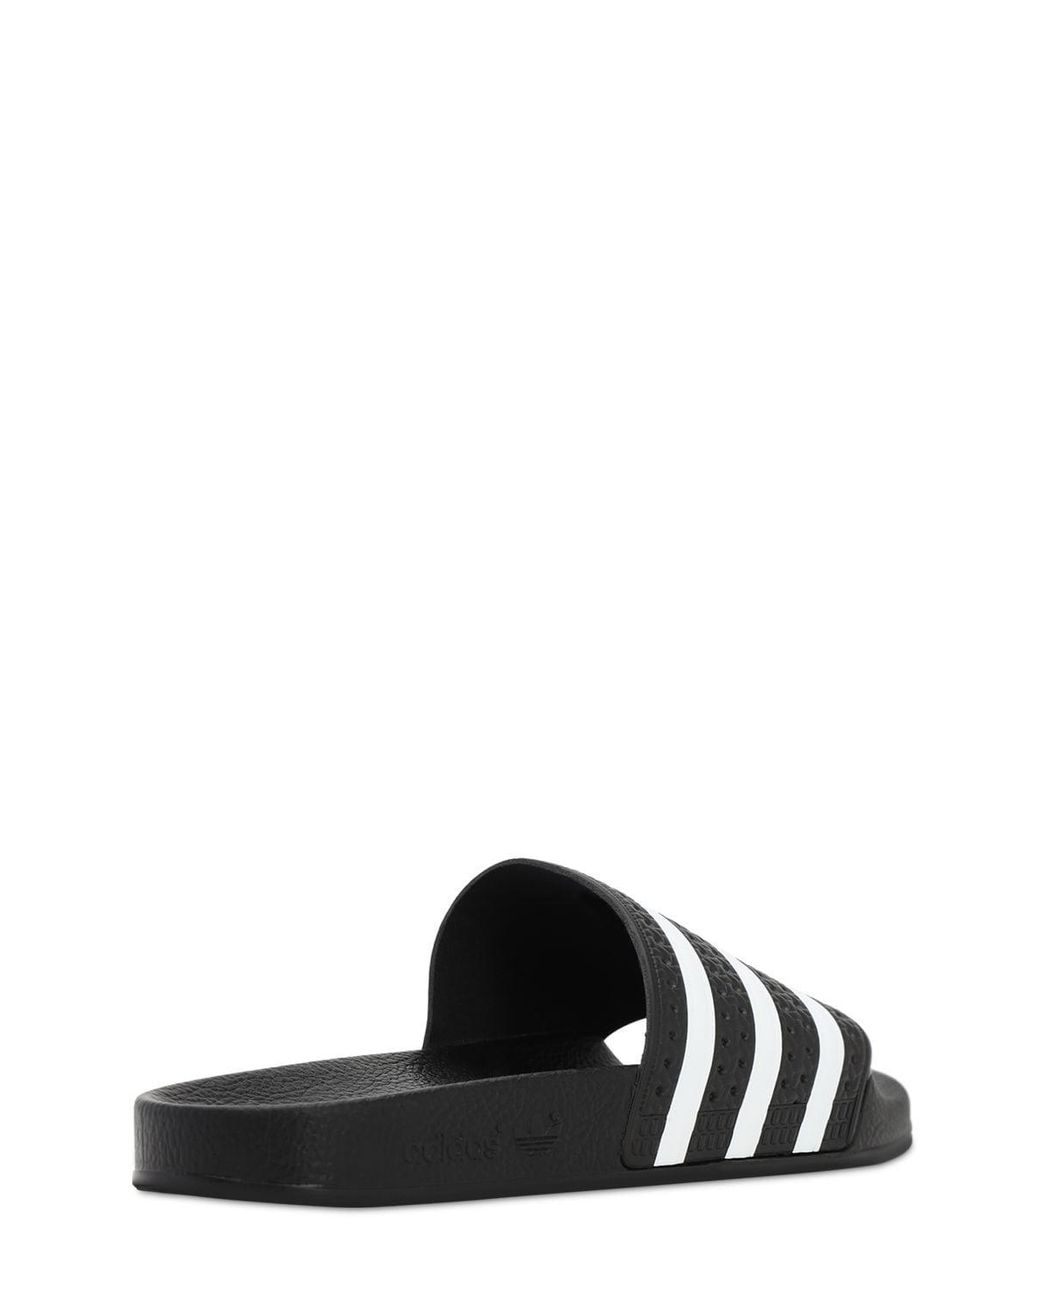 adidas Originals Adilette Striped Slide Sandals in Black/White (White) |  Lyst